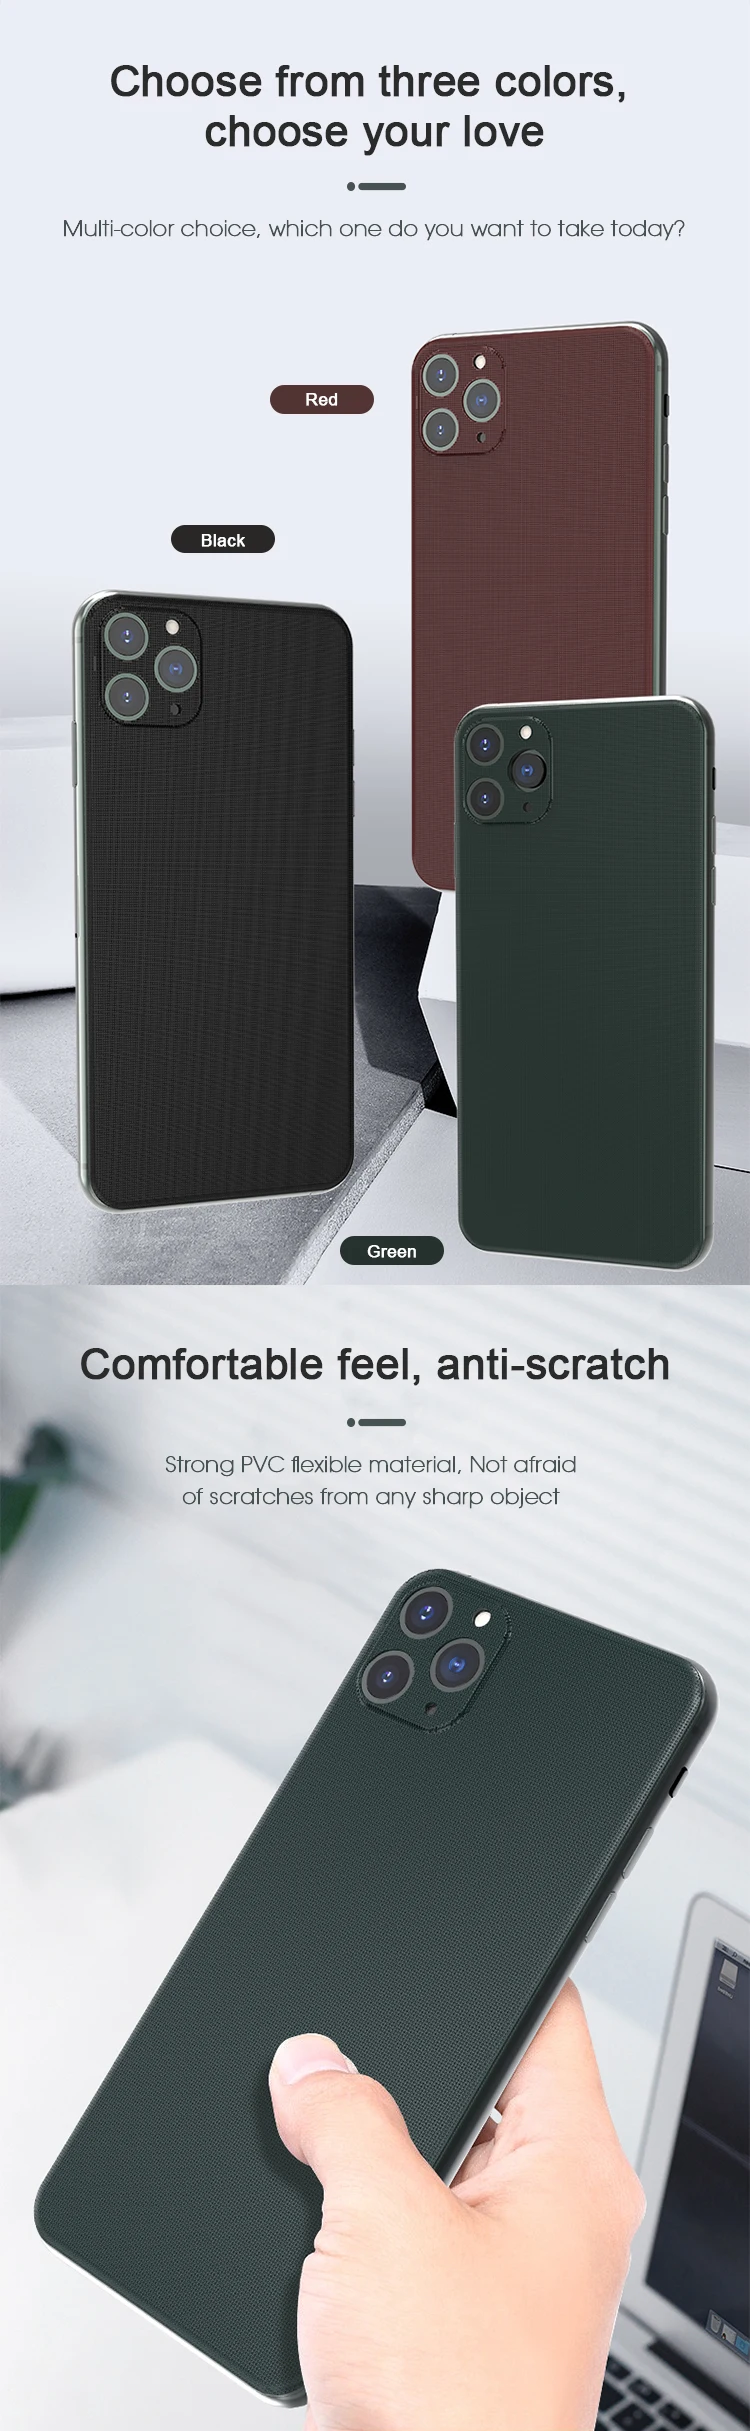 Green Black Red 3d Carbon Fiber Pvc Back Film Ceramic Screen Protector For Iphone 11 Pro 11 11 Pro Max Xs Xr X Buy 3d Textured Carbon Fiber Back Film For